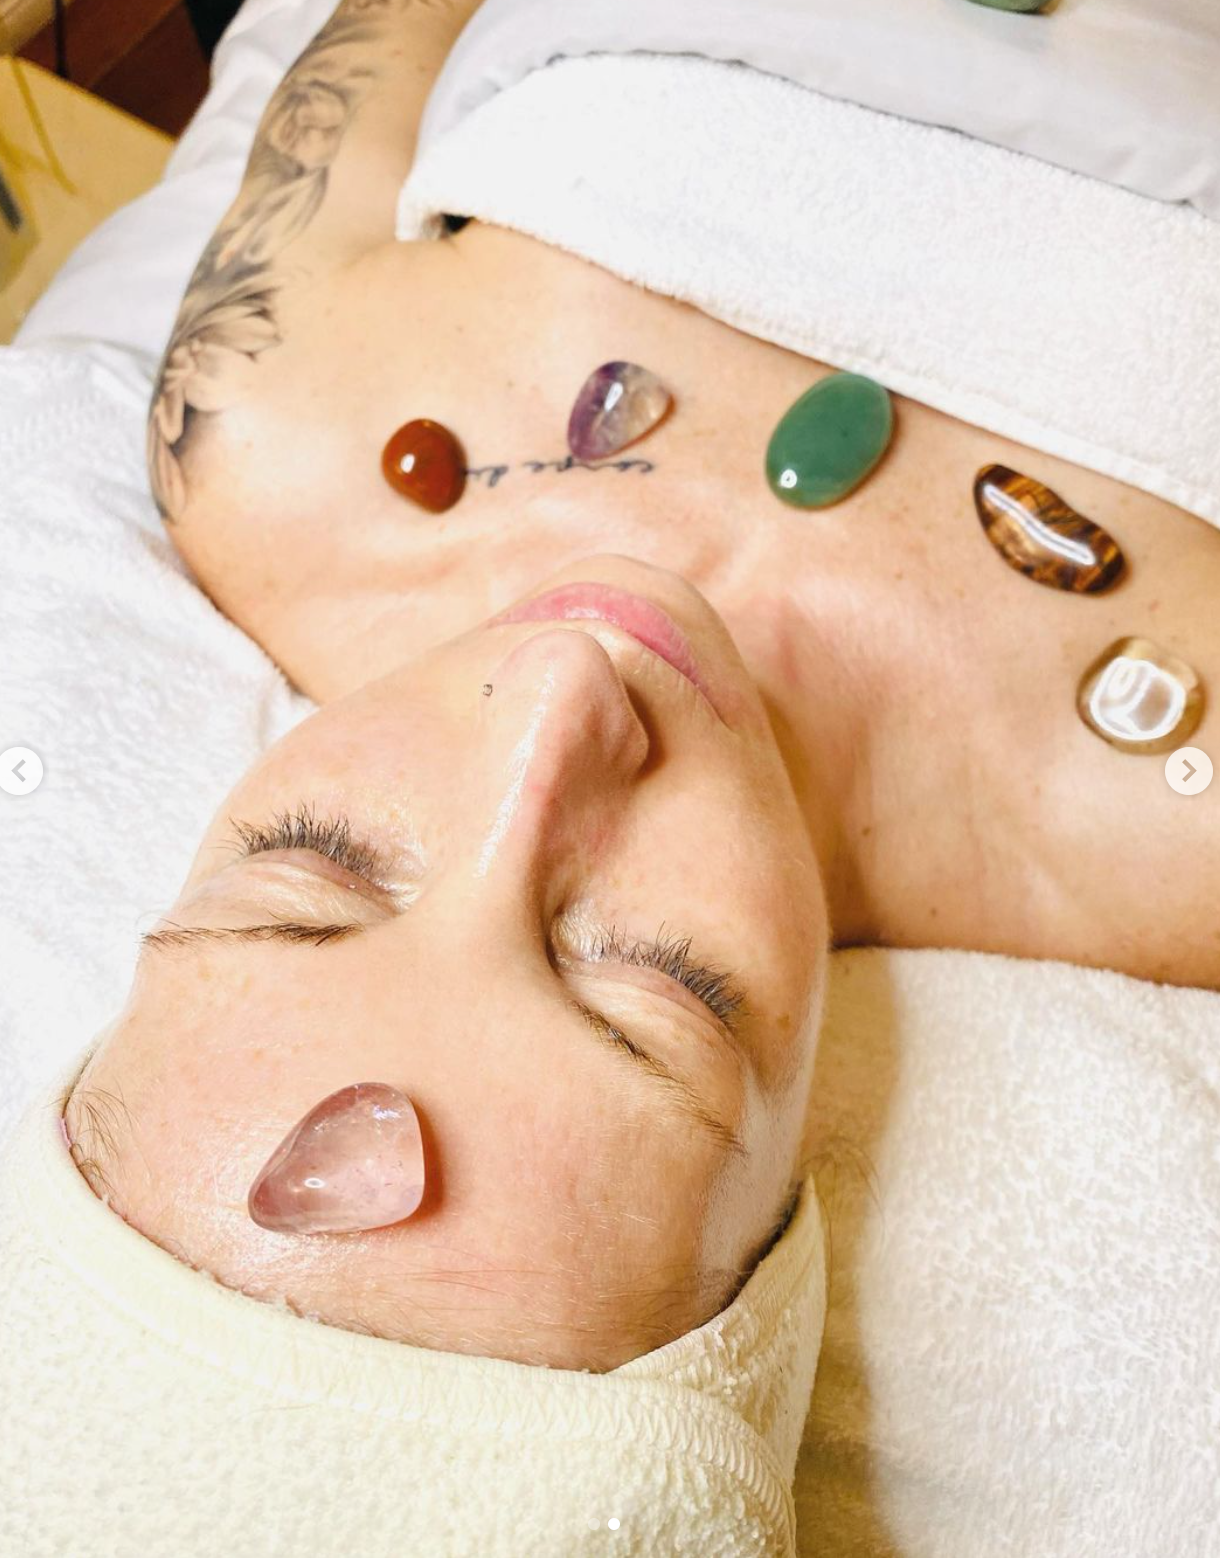 Toronto Spa Glow By Ive Crystal healing Holistic Facial and Medical Rejuvenation Facials